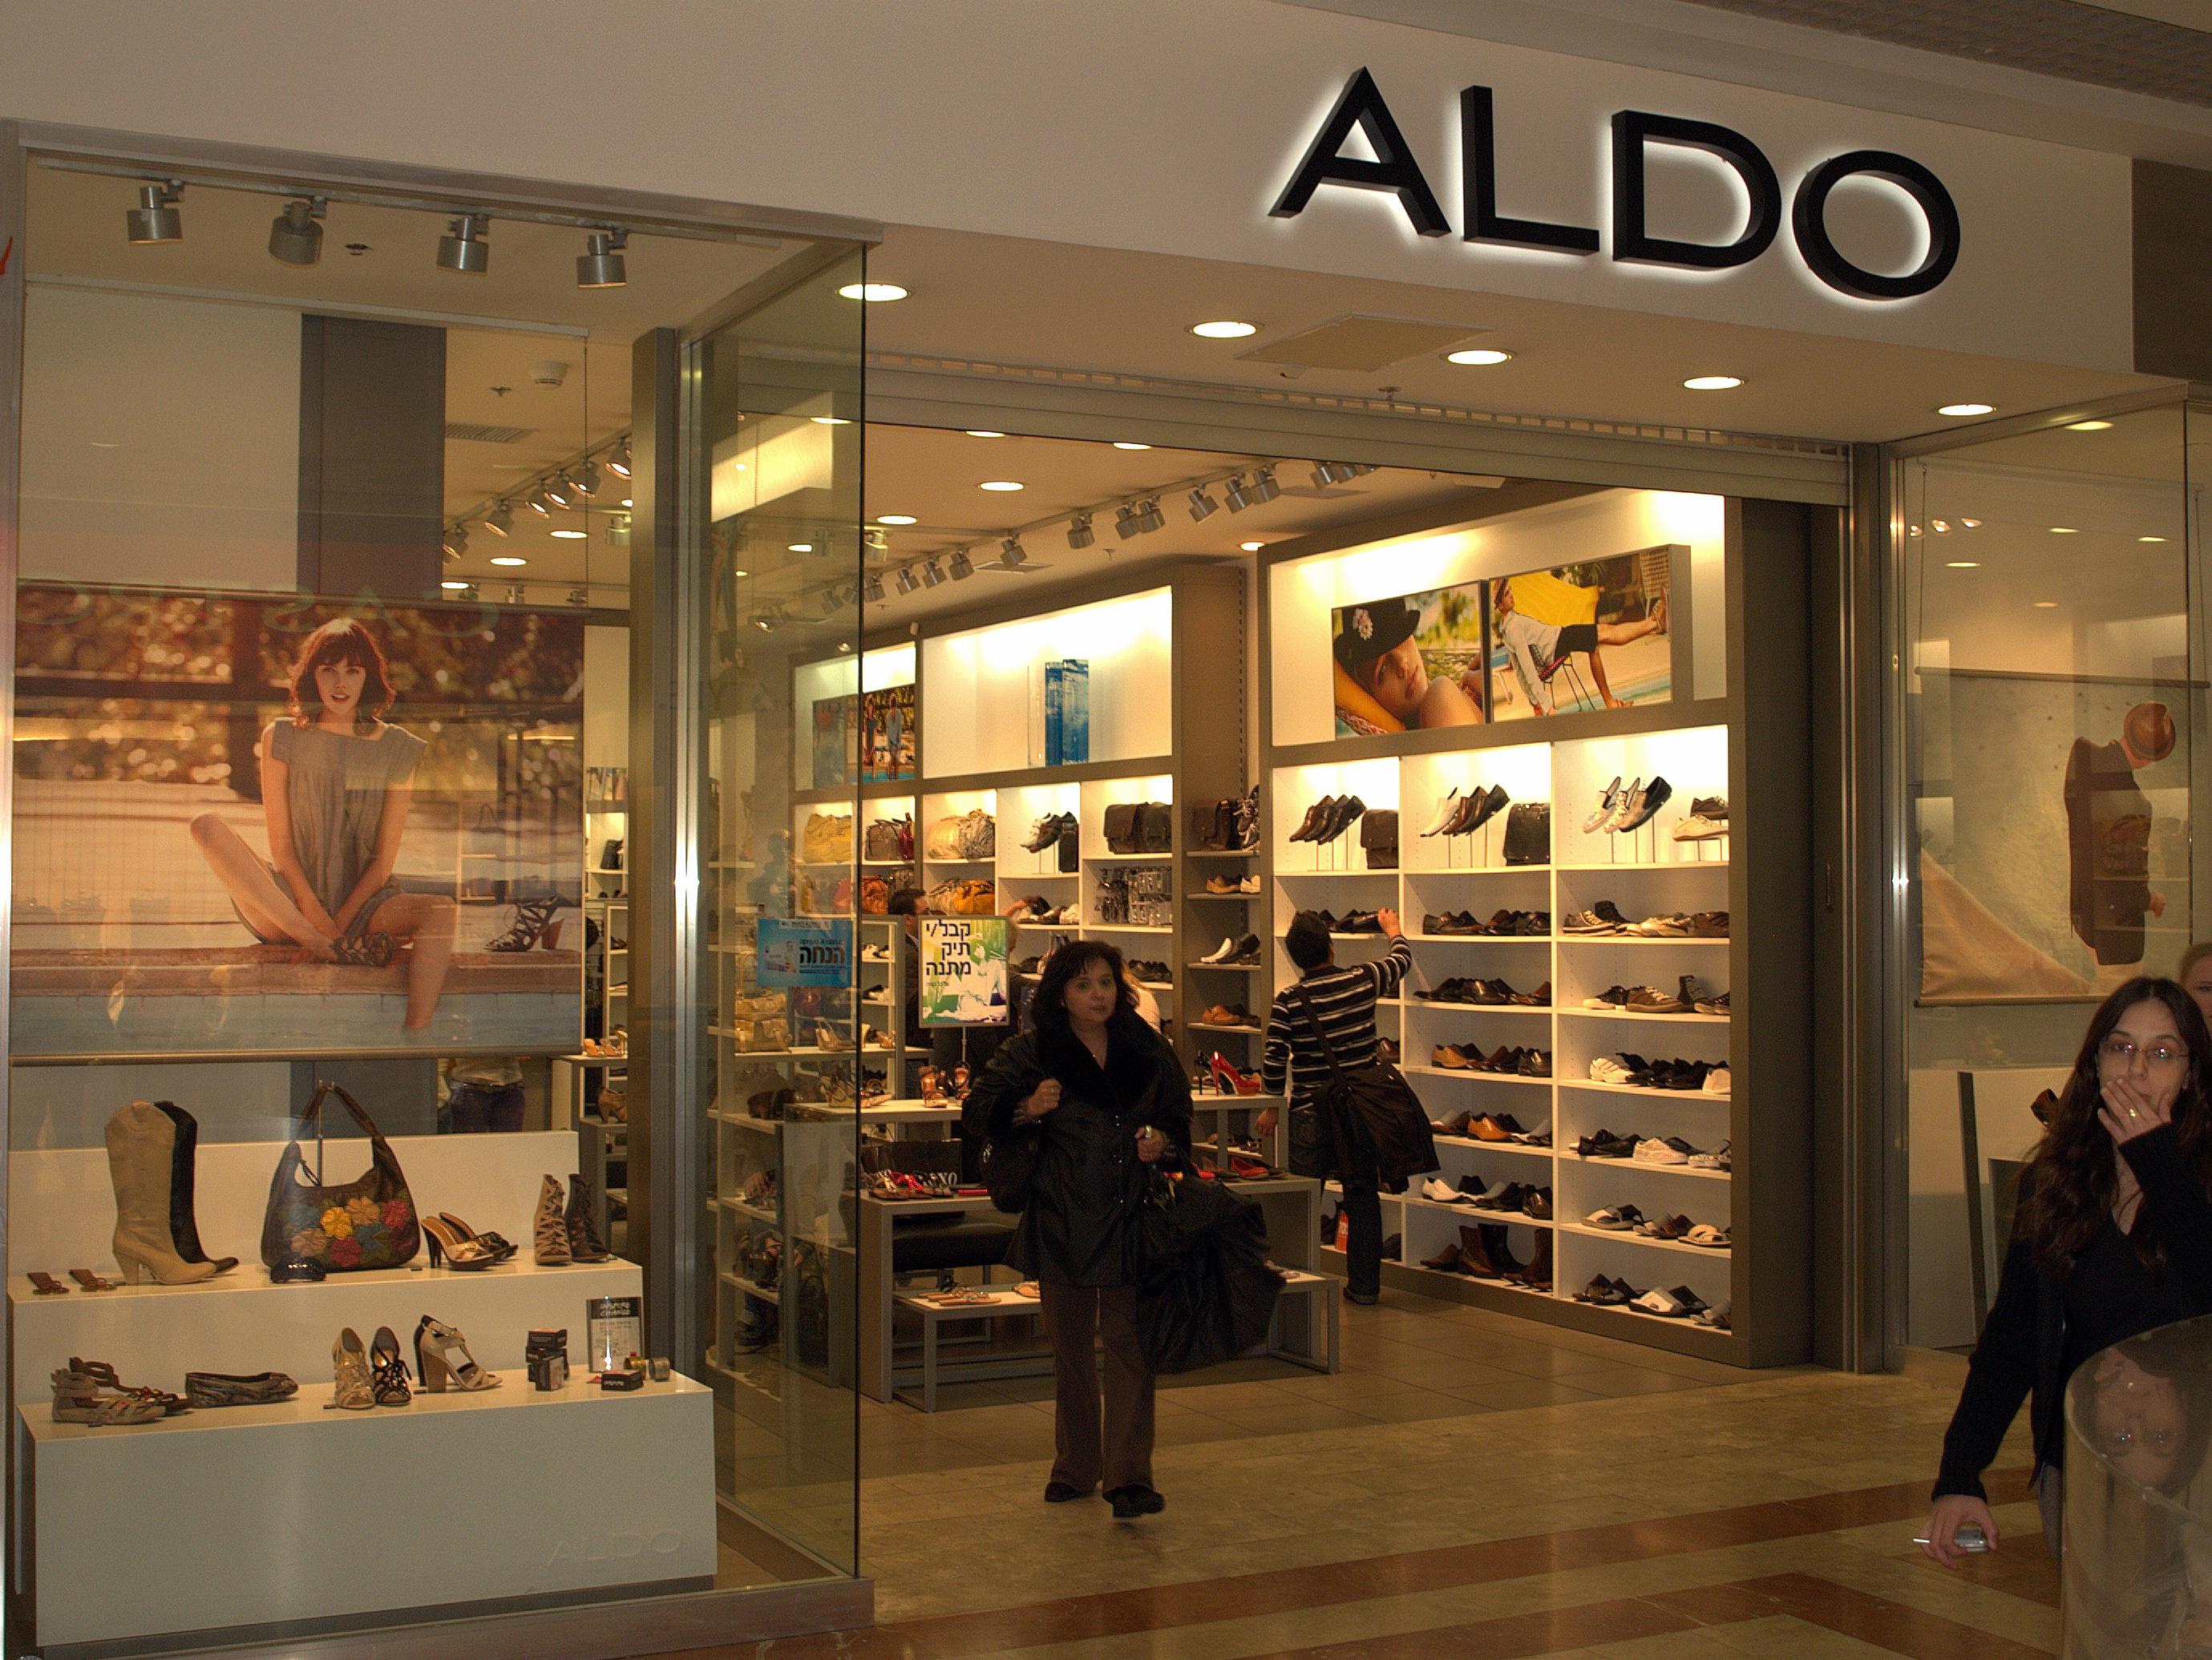 File:Aldo shoe store in Tel Aviv Israel.jpg - Wikimedia Commons